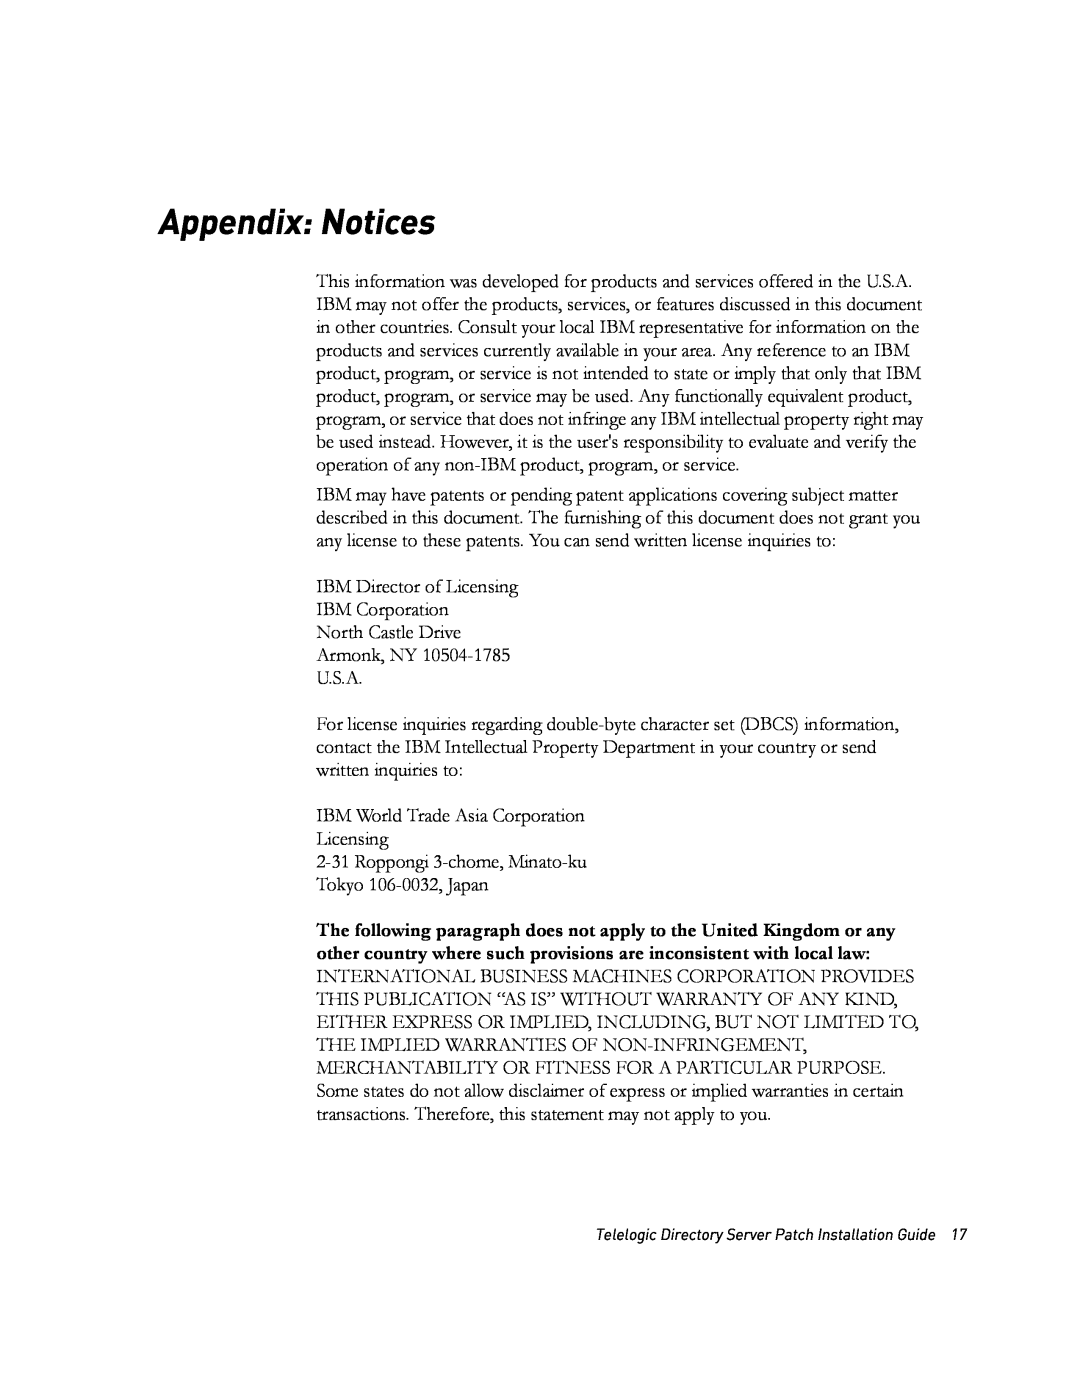 IBM Telelogic Directory Server manual Appendix: Notices 